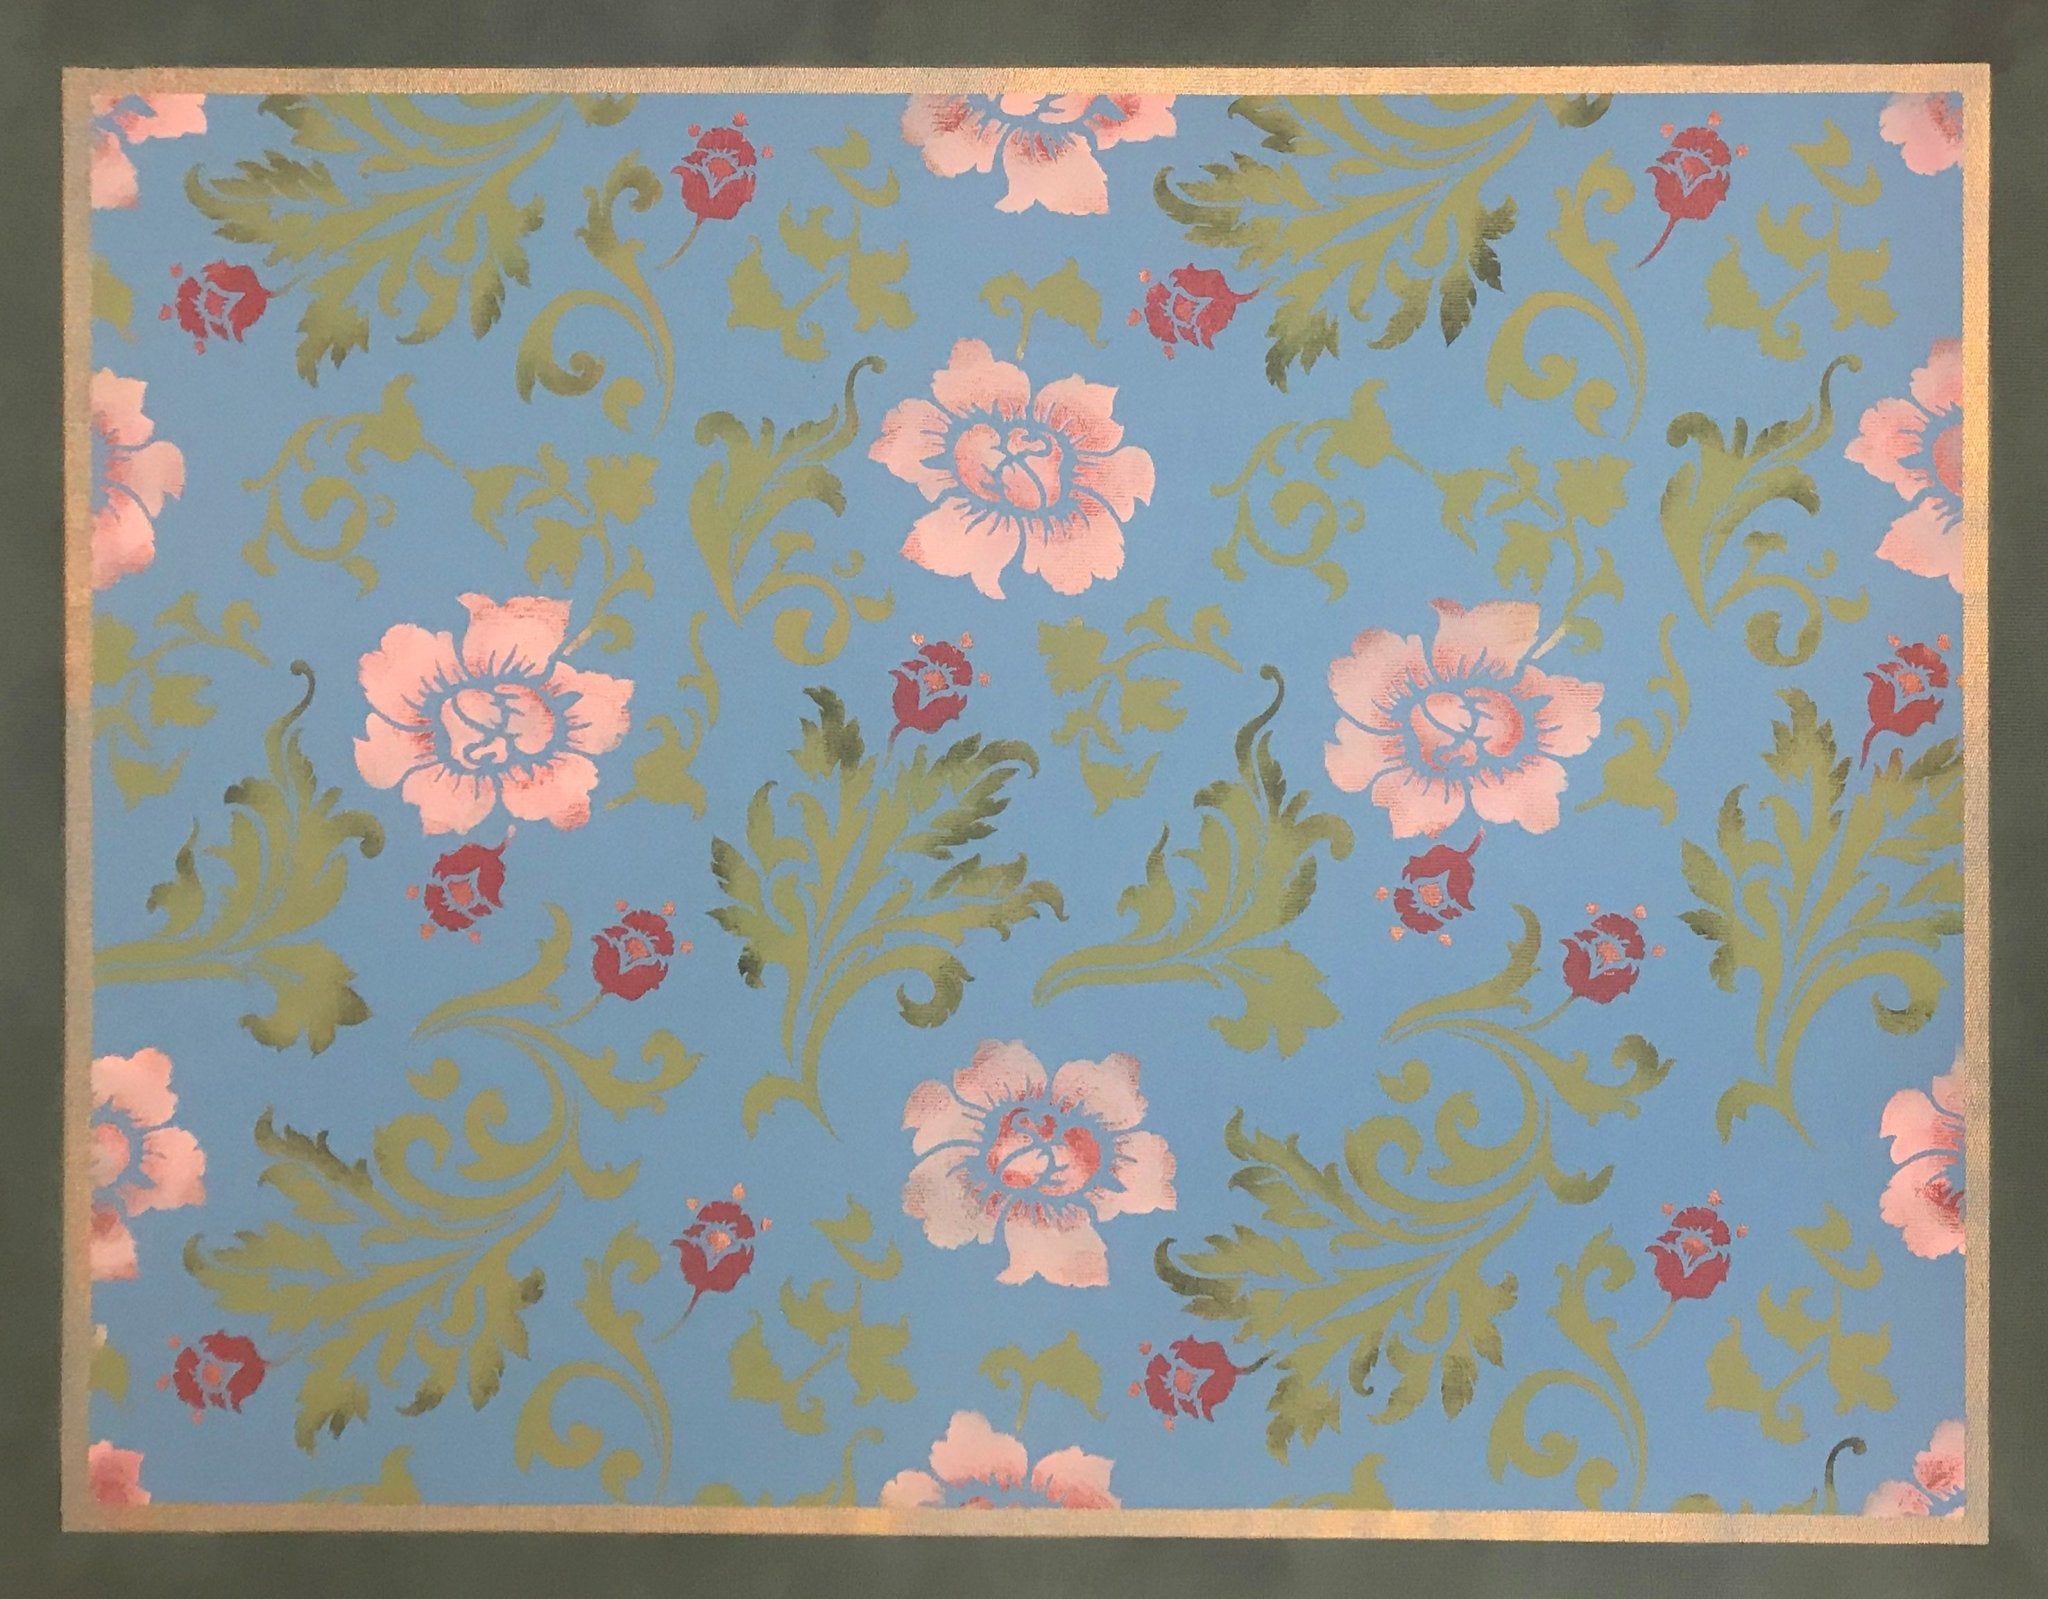 Full image of Wild Roses Floorcloth #4.